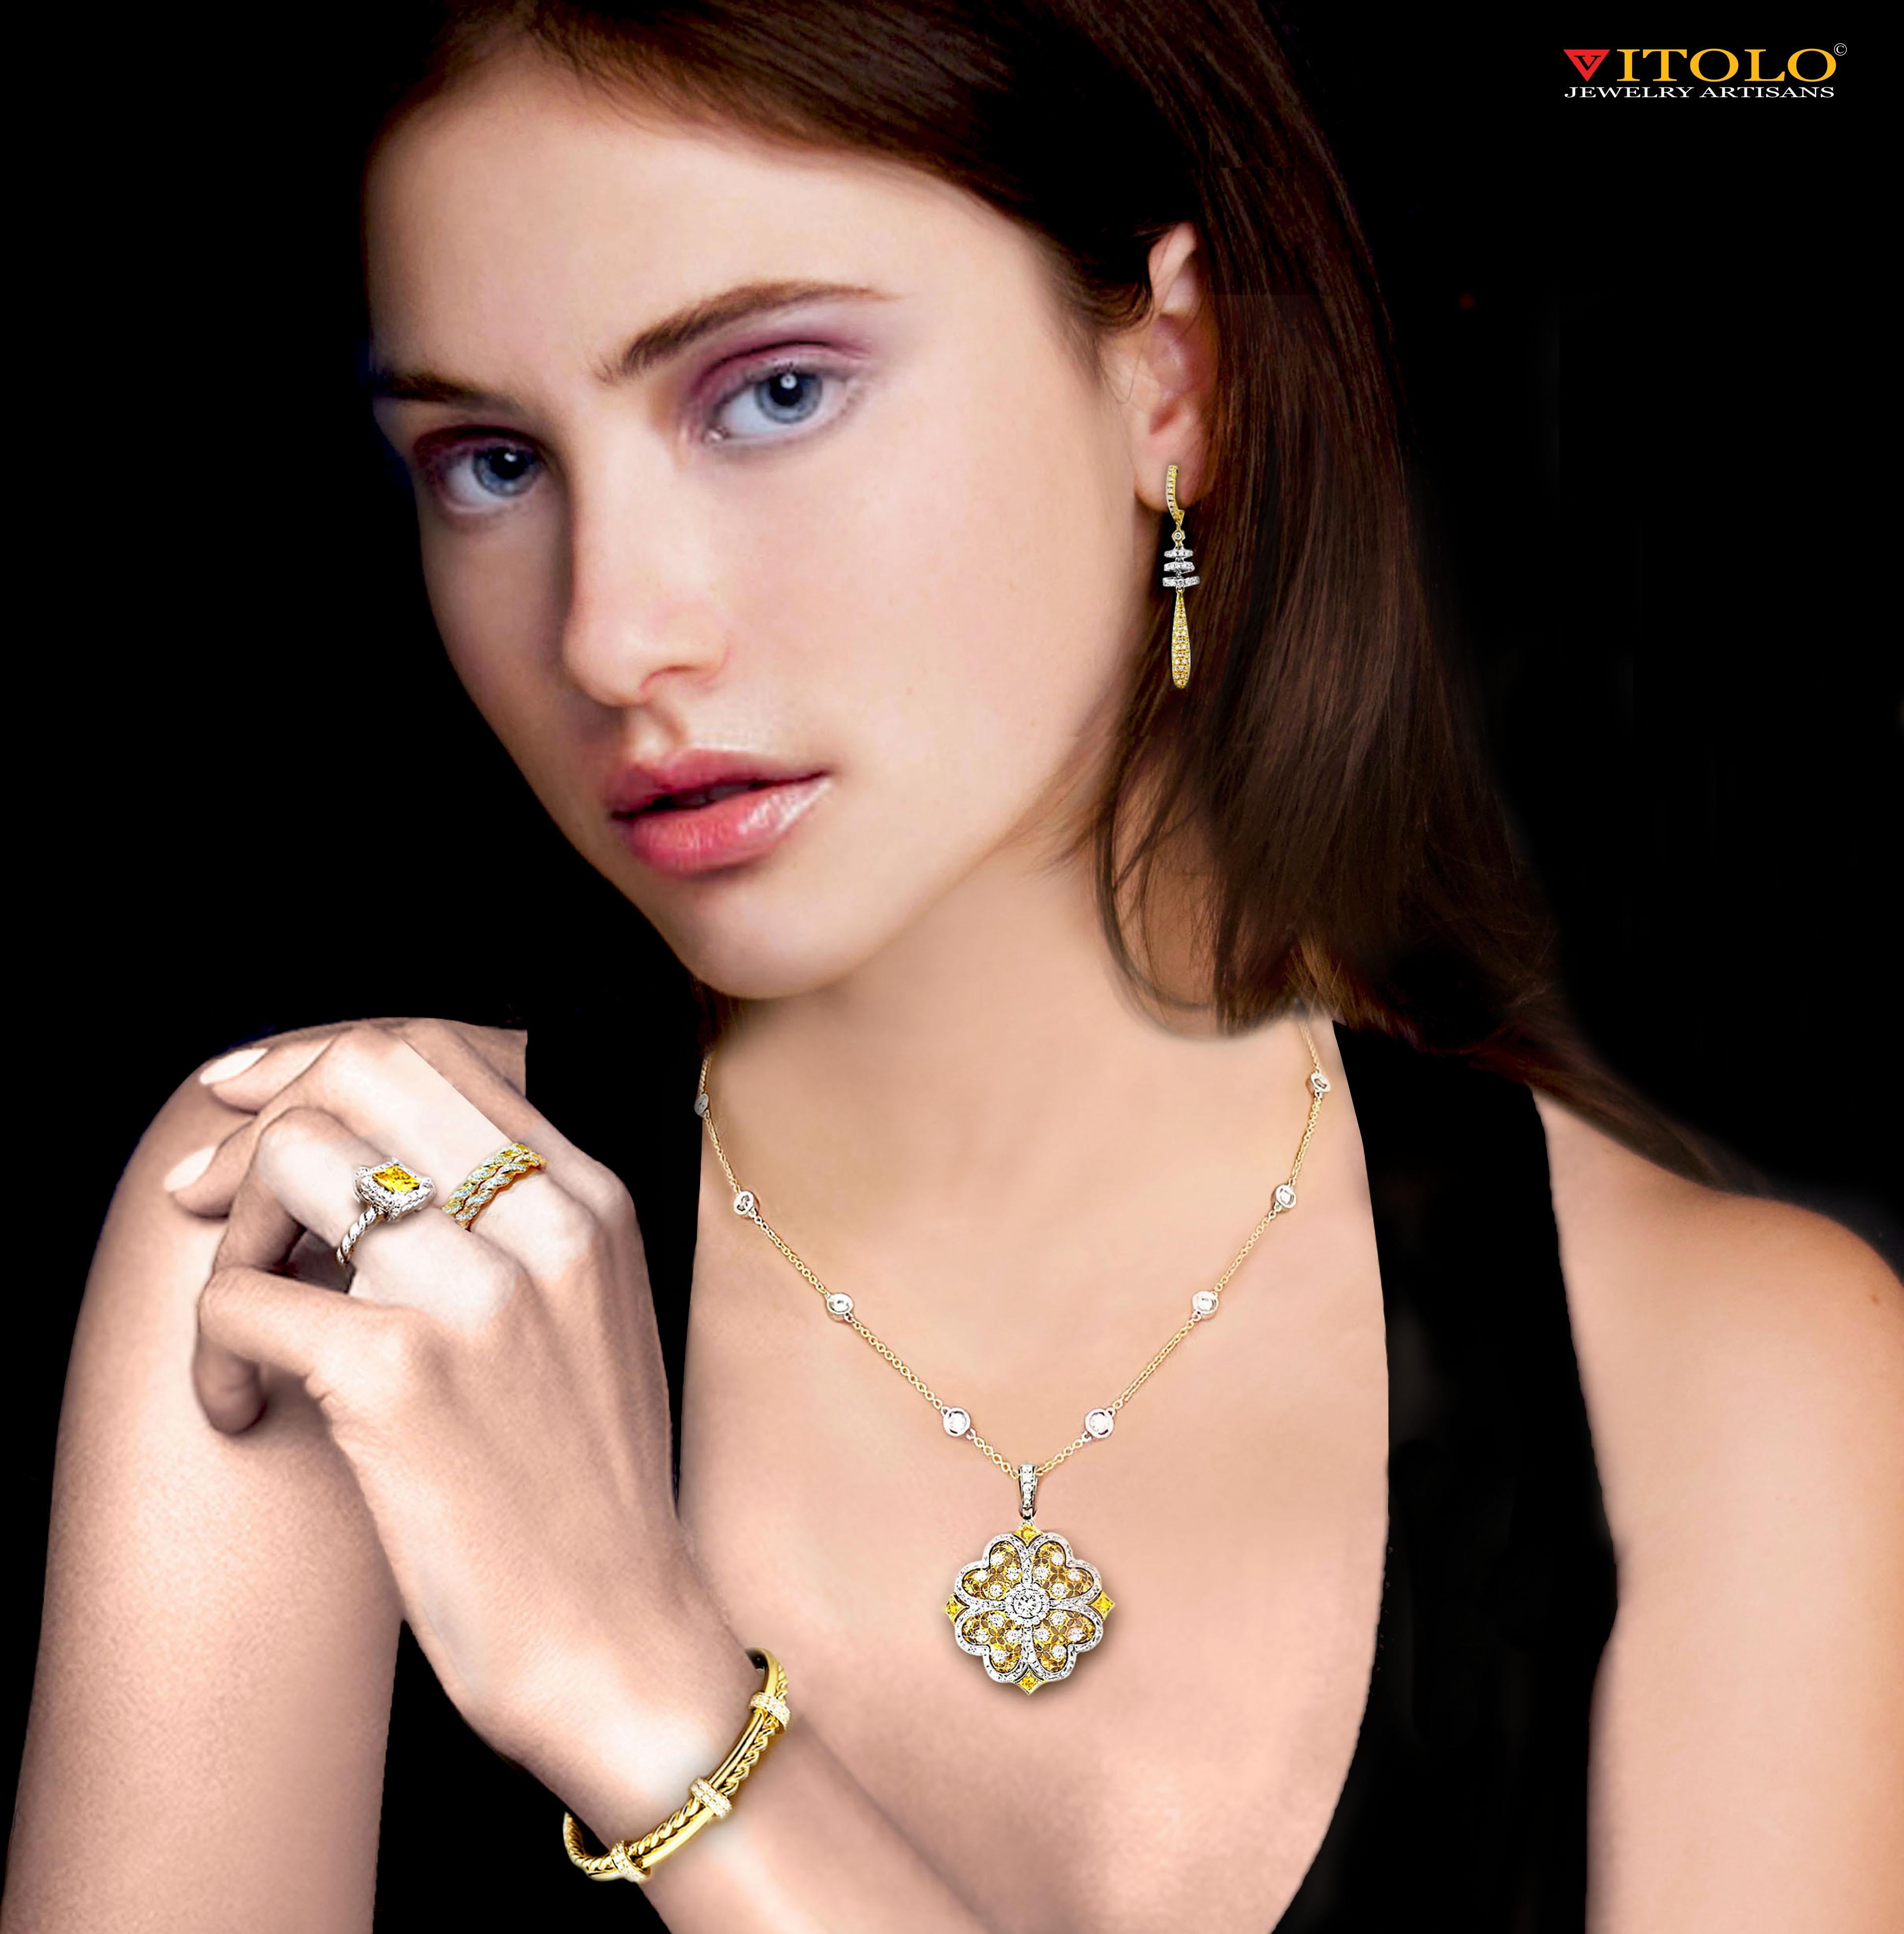 Round Cut Vitolo 18 Karat Gold Flower Motif Luxury Diamond Pendant For Sale